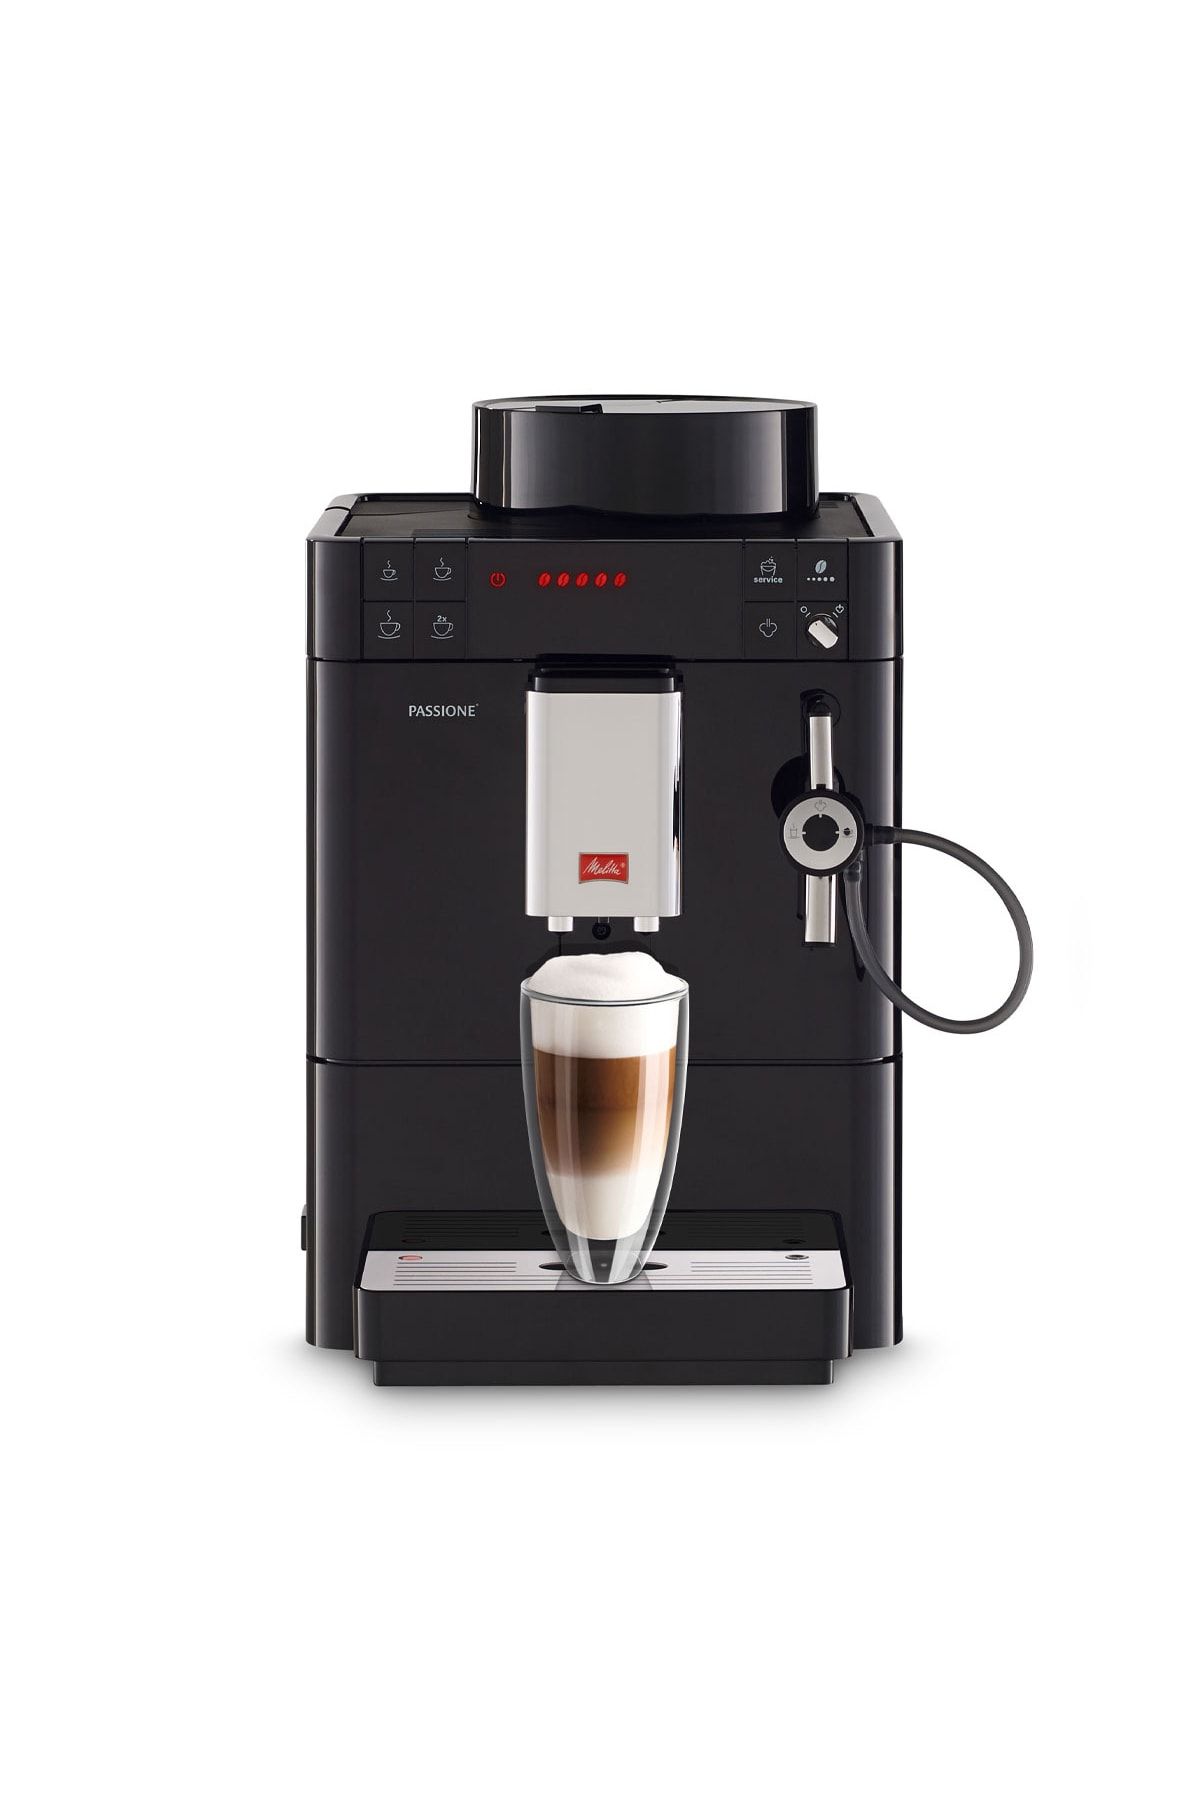 melitta Caffeo Passione Tam Otomatik Kahve Makinesi Siyah F53/0-102